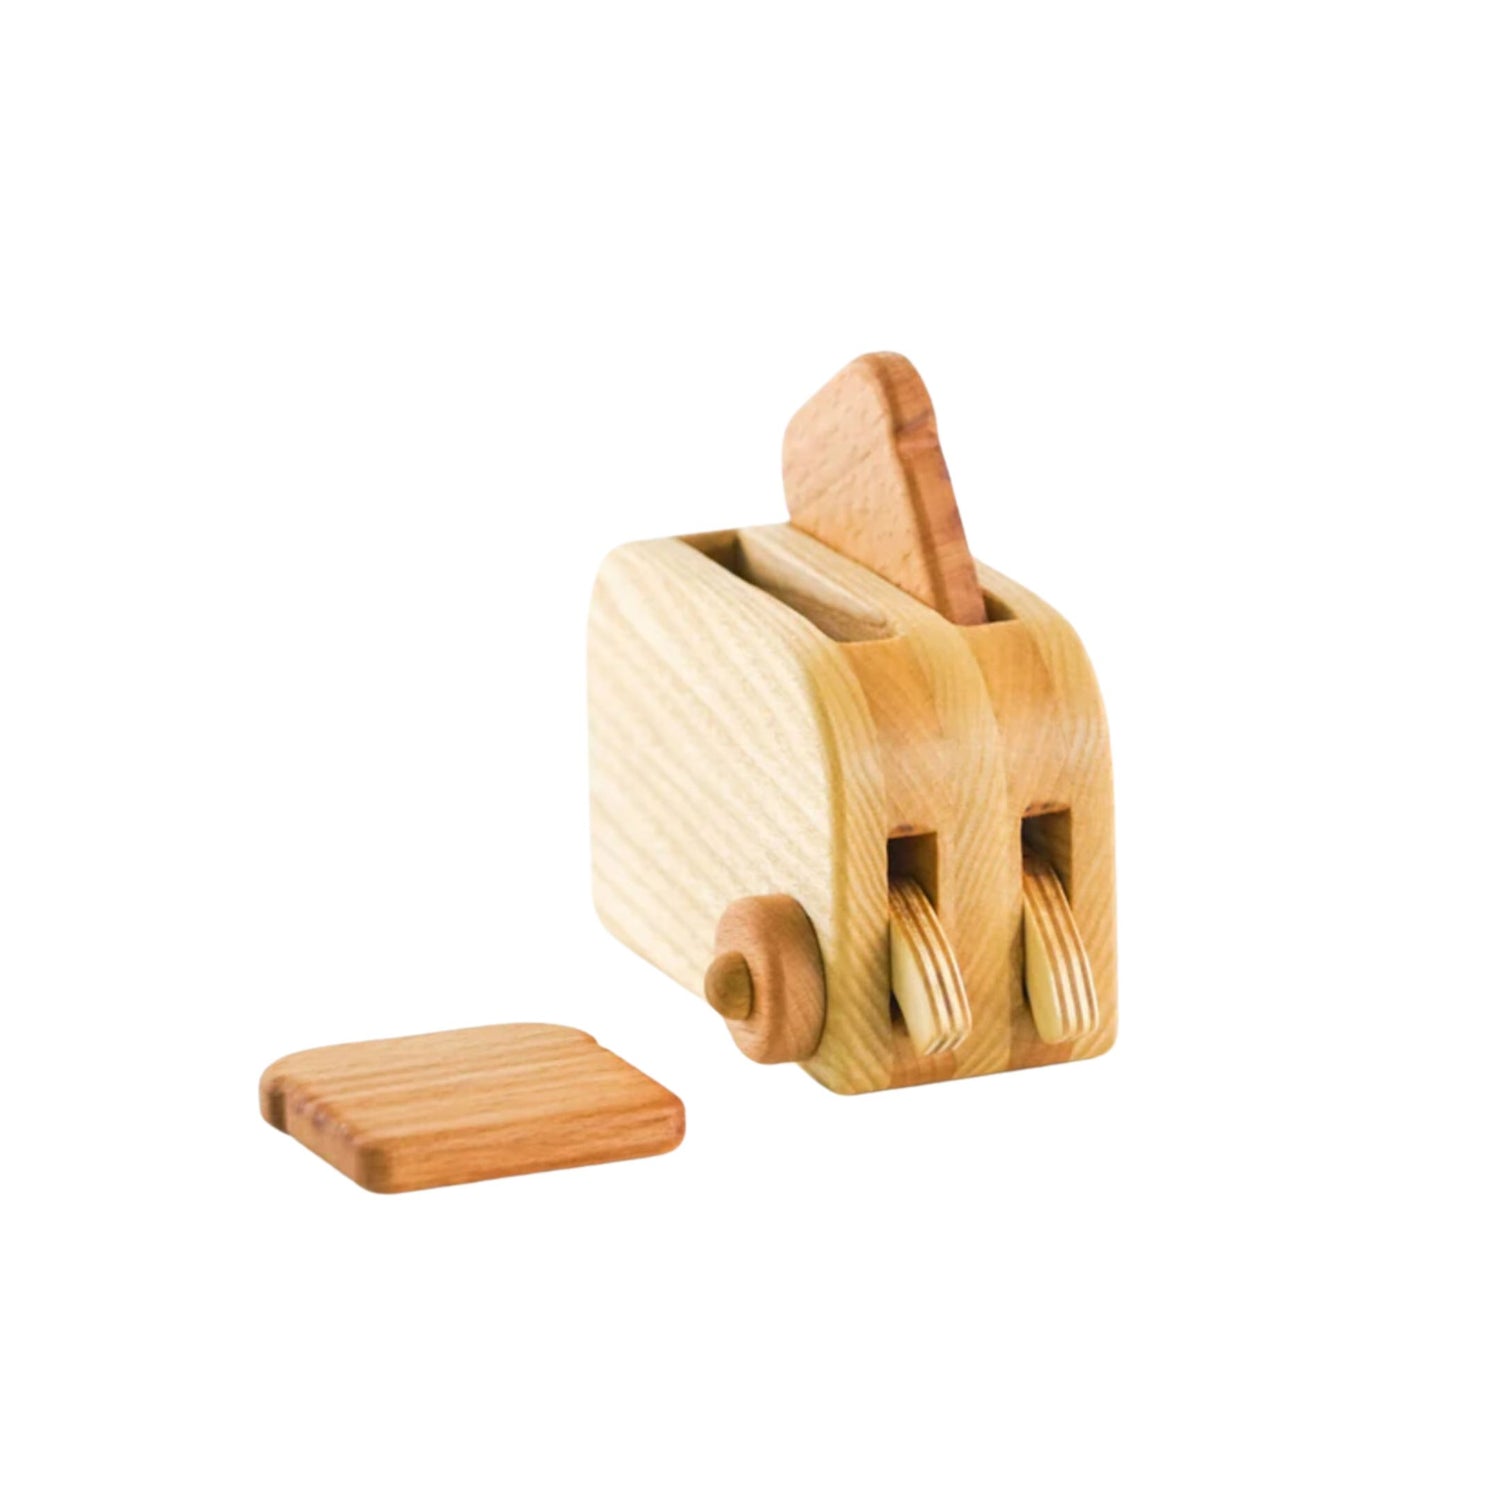 Handmade Wooden Play Toaster